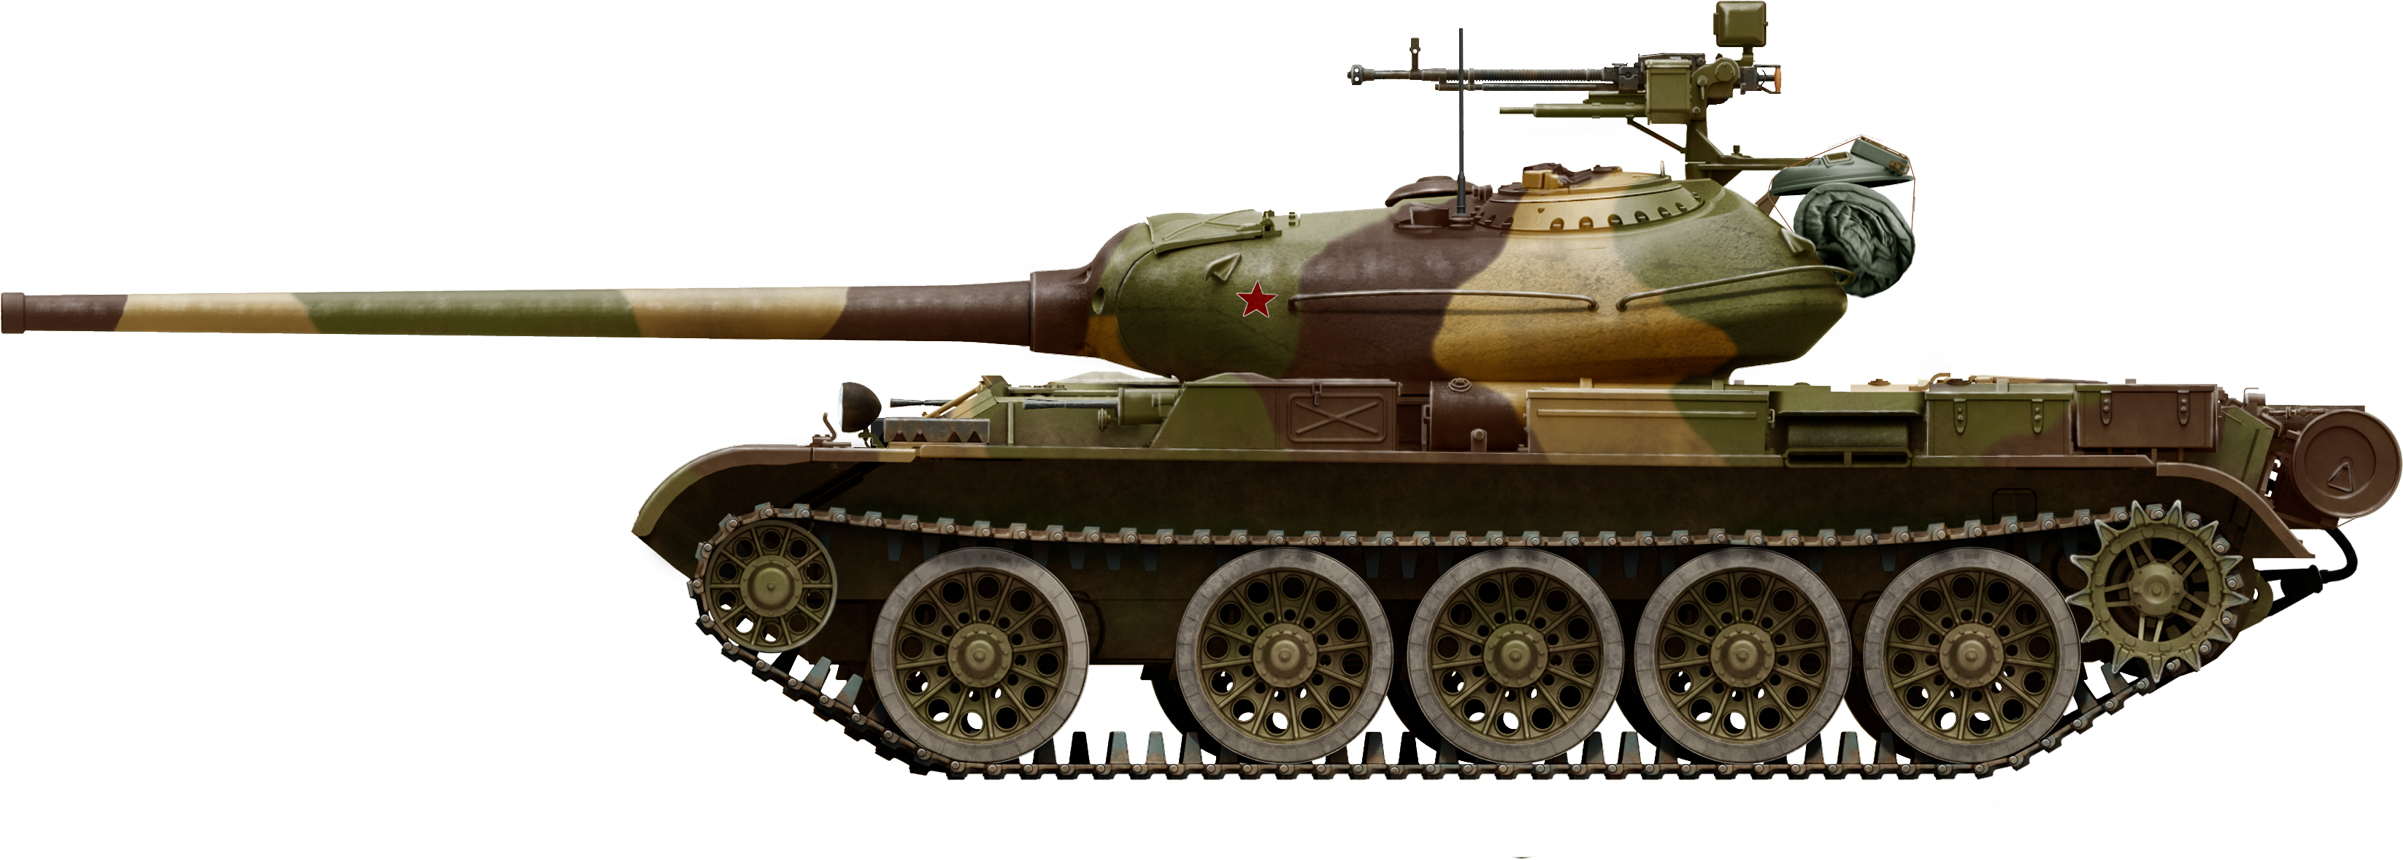 Т-54 танк сбоку